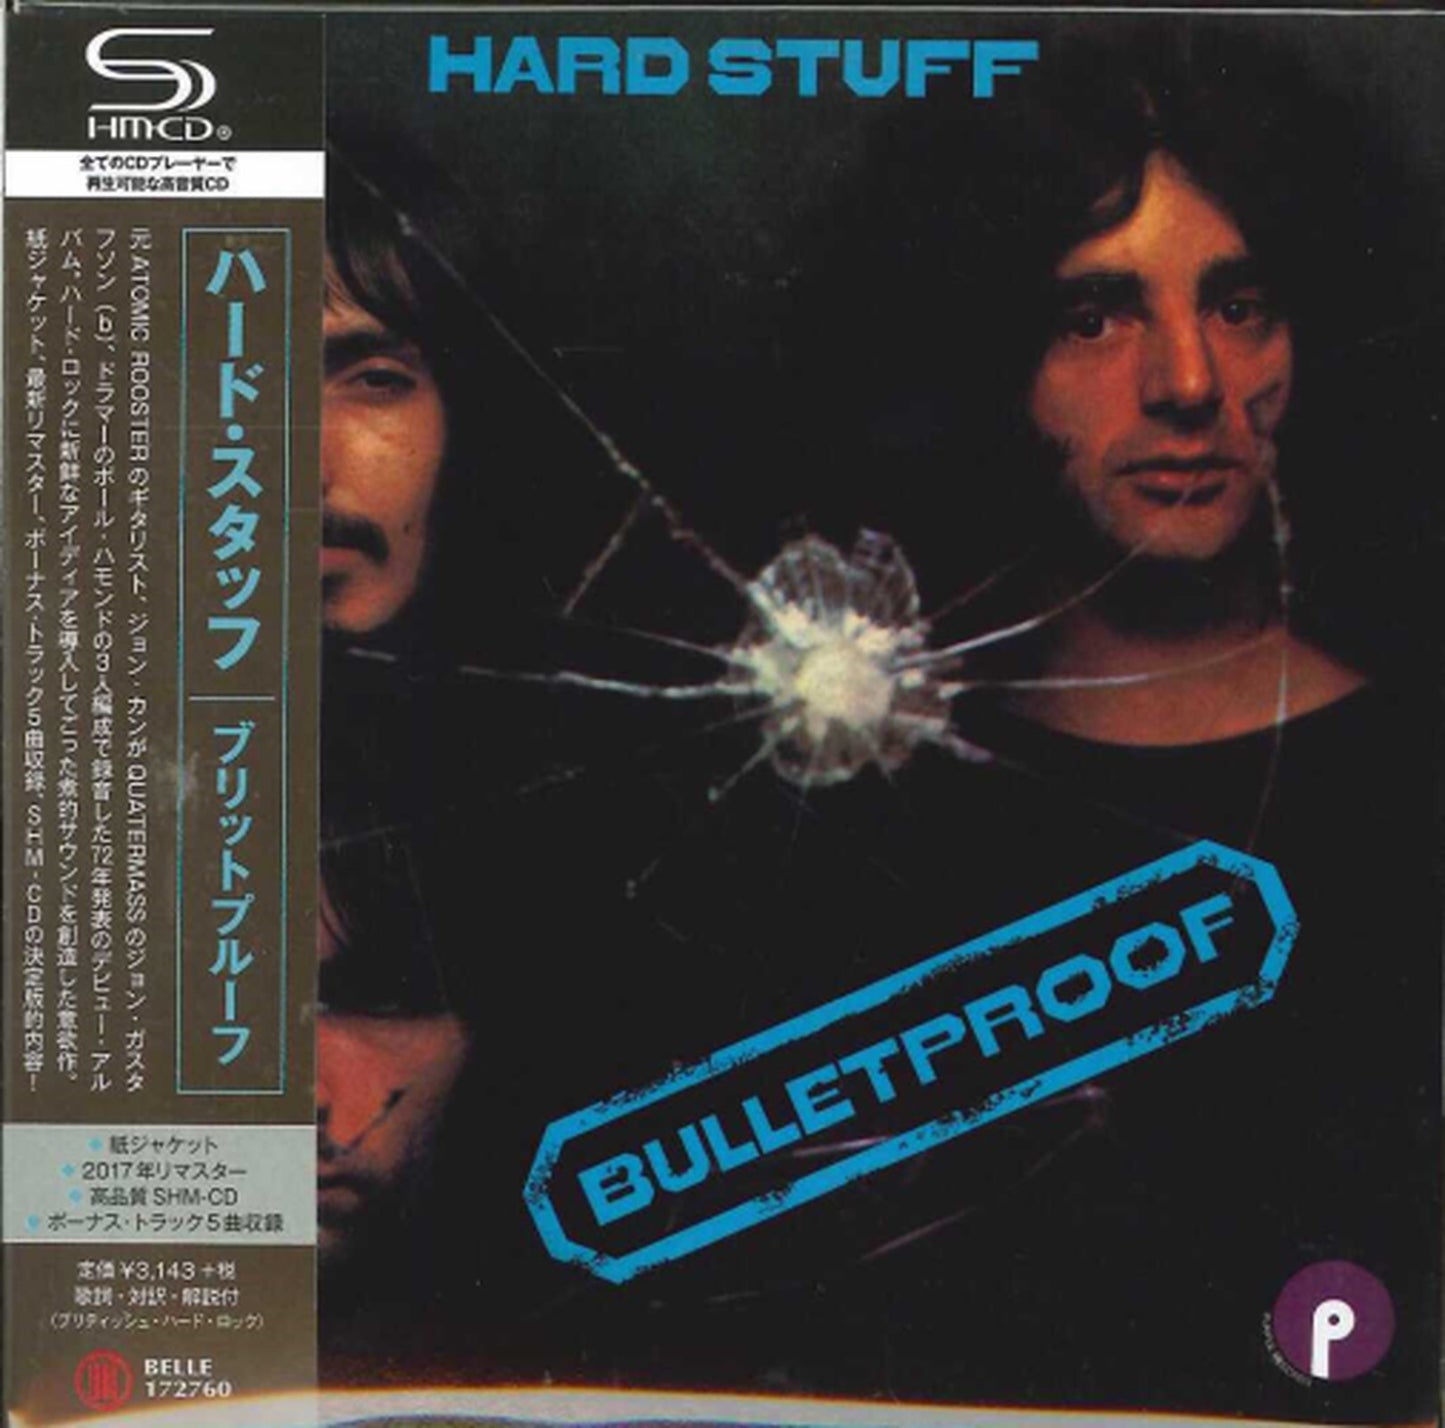 Hard Stuff - Bulletproof - Mini LP SHM-CD Bonus Track